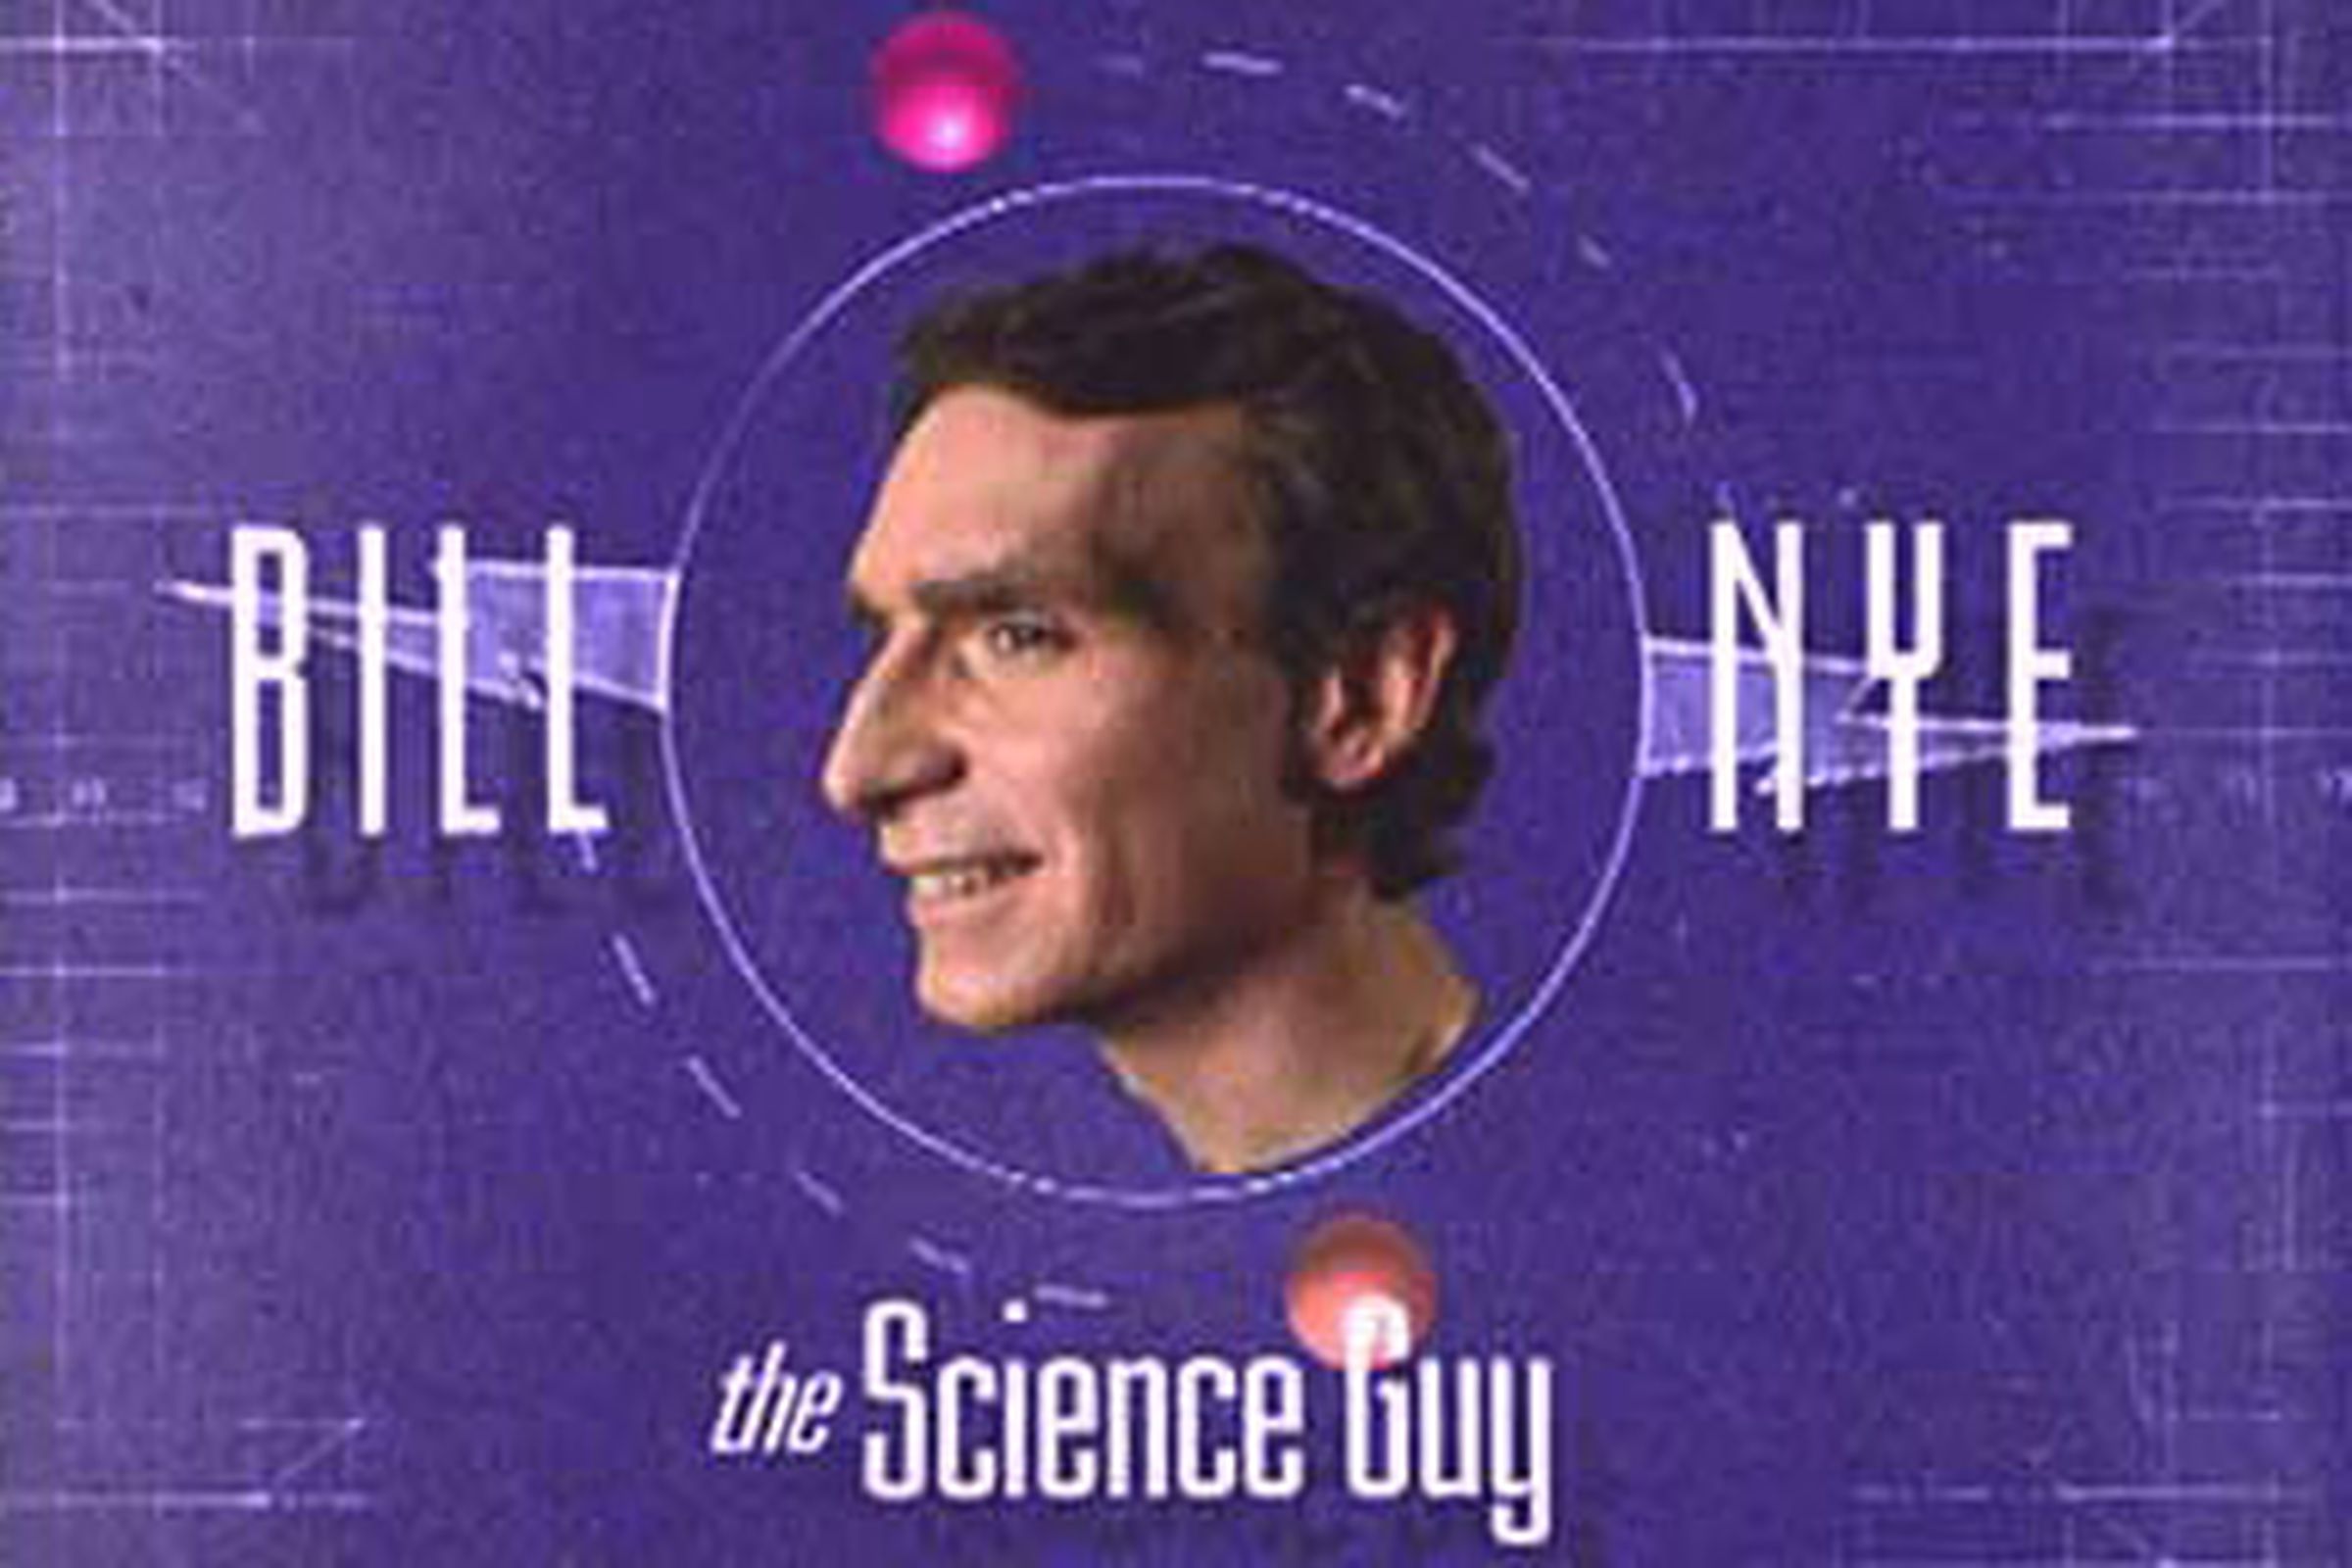 bill nye science guy